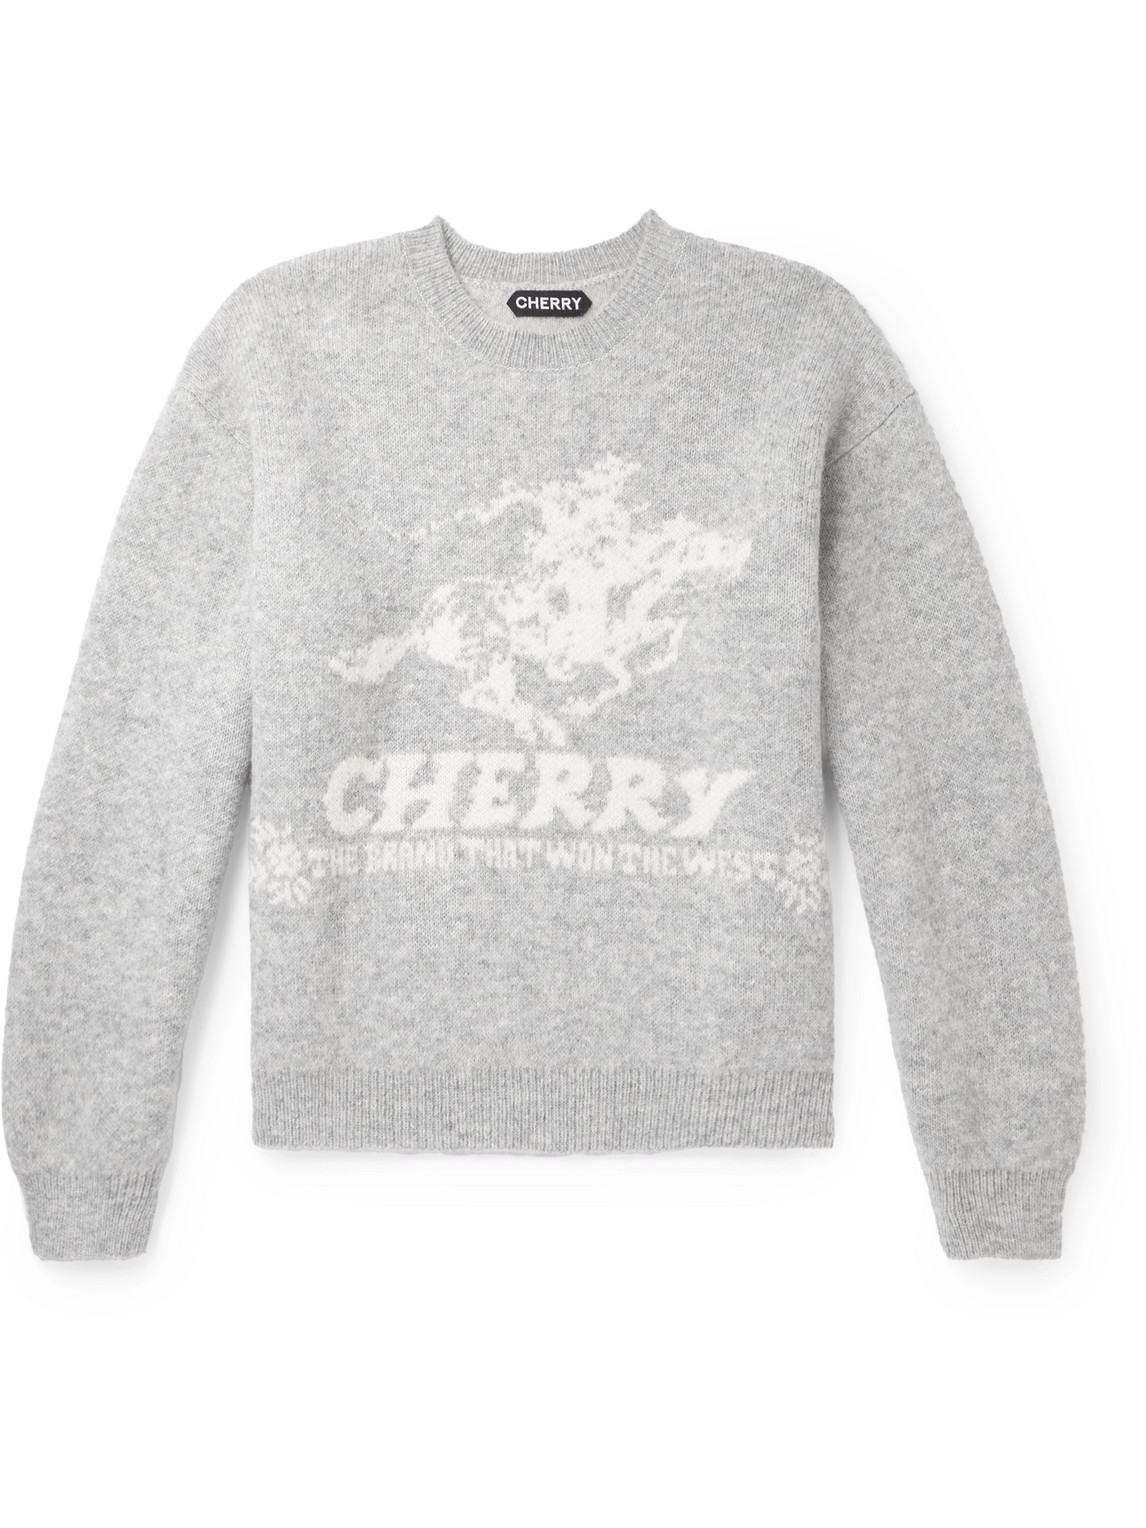 Cherry Los Angeles Intarsia-knit Alpaca-blend Jumper In Grey